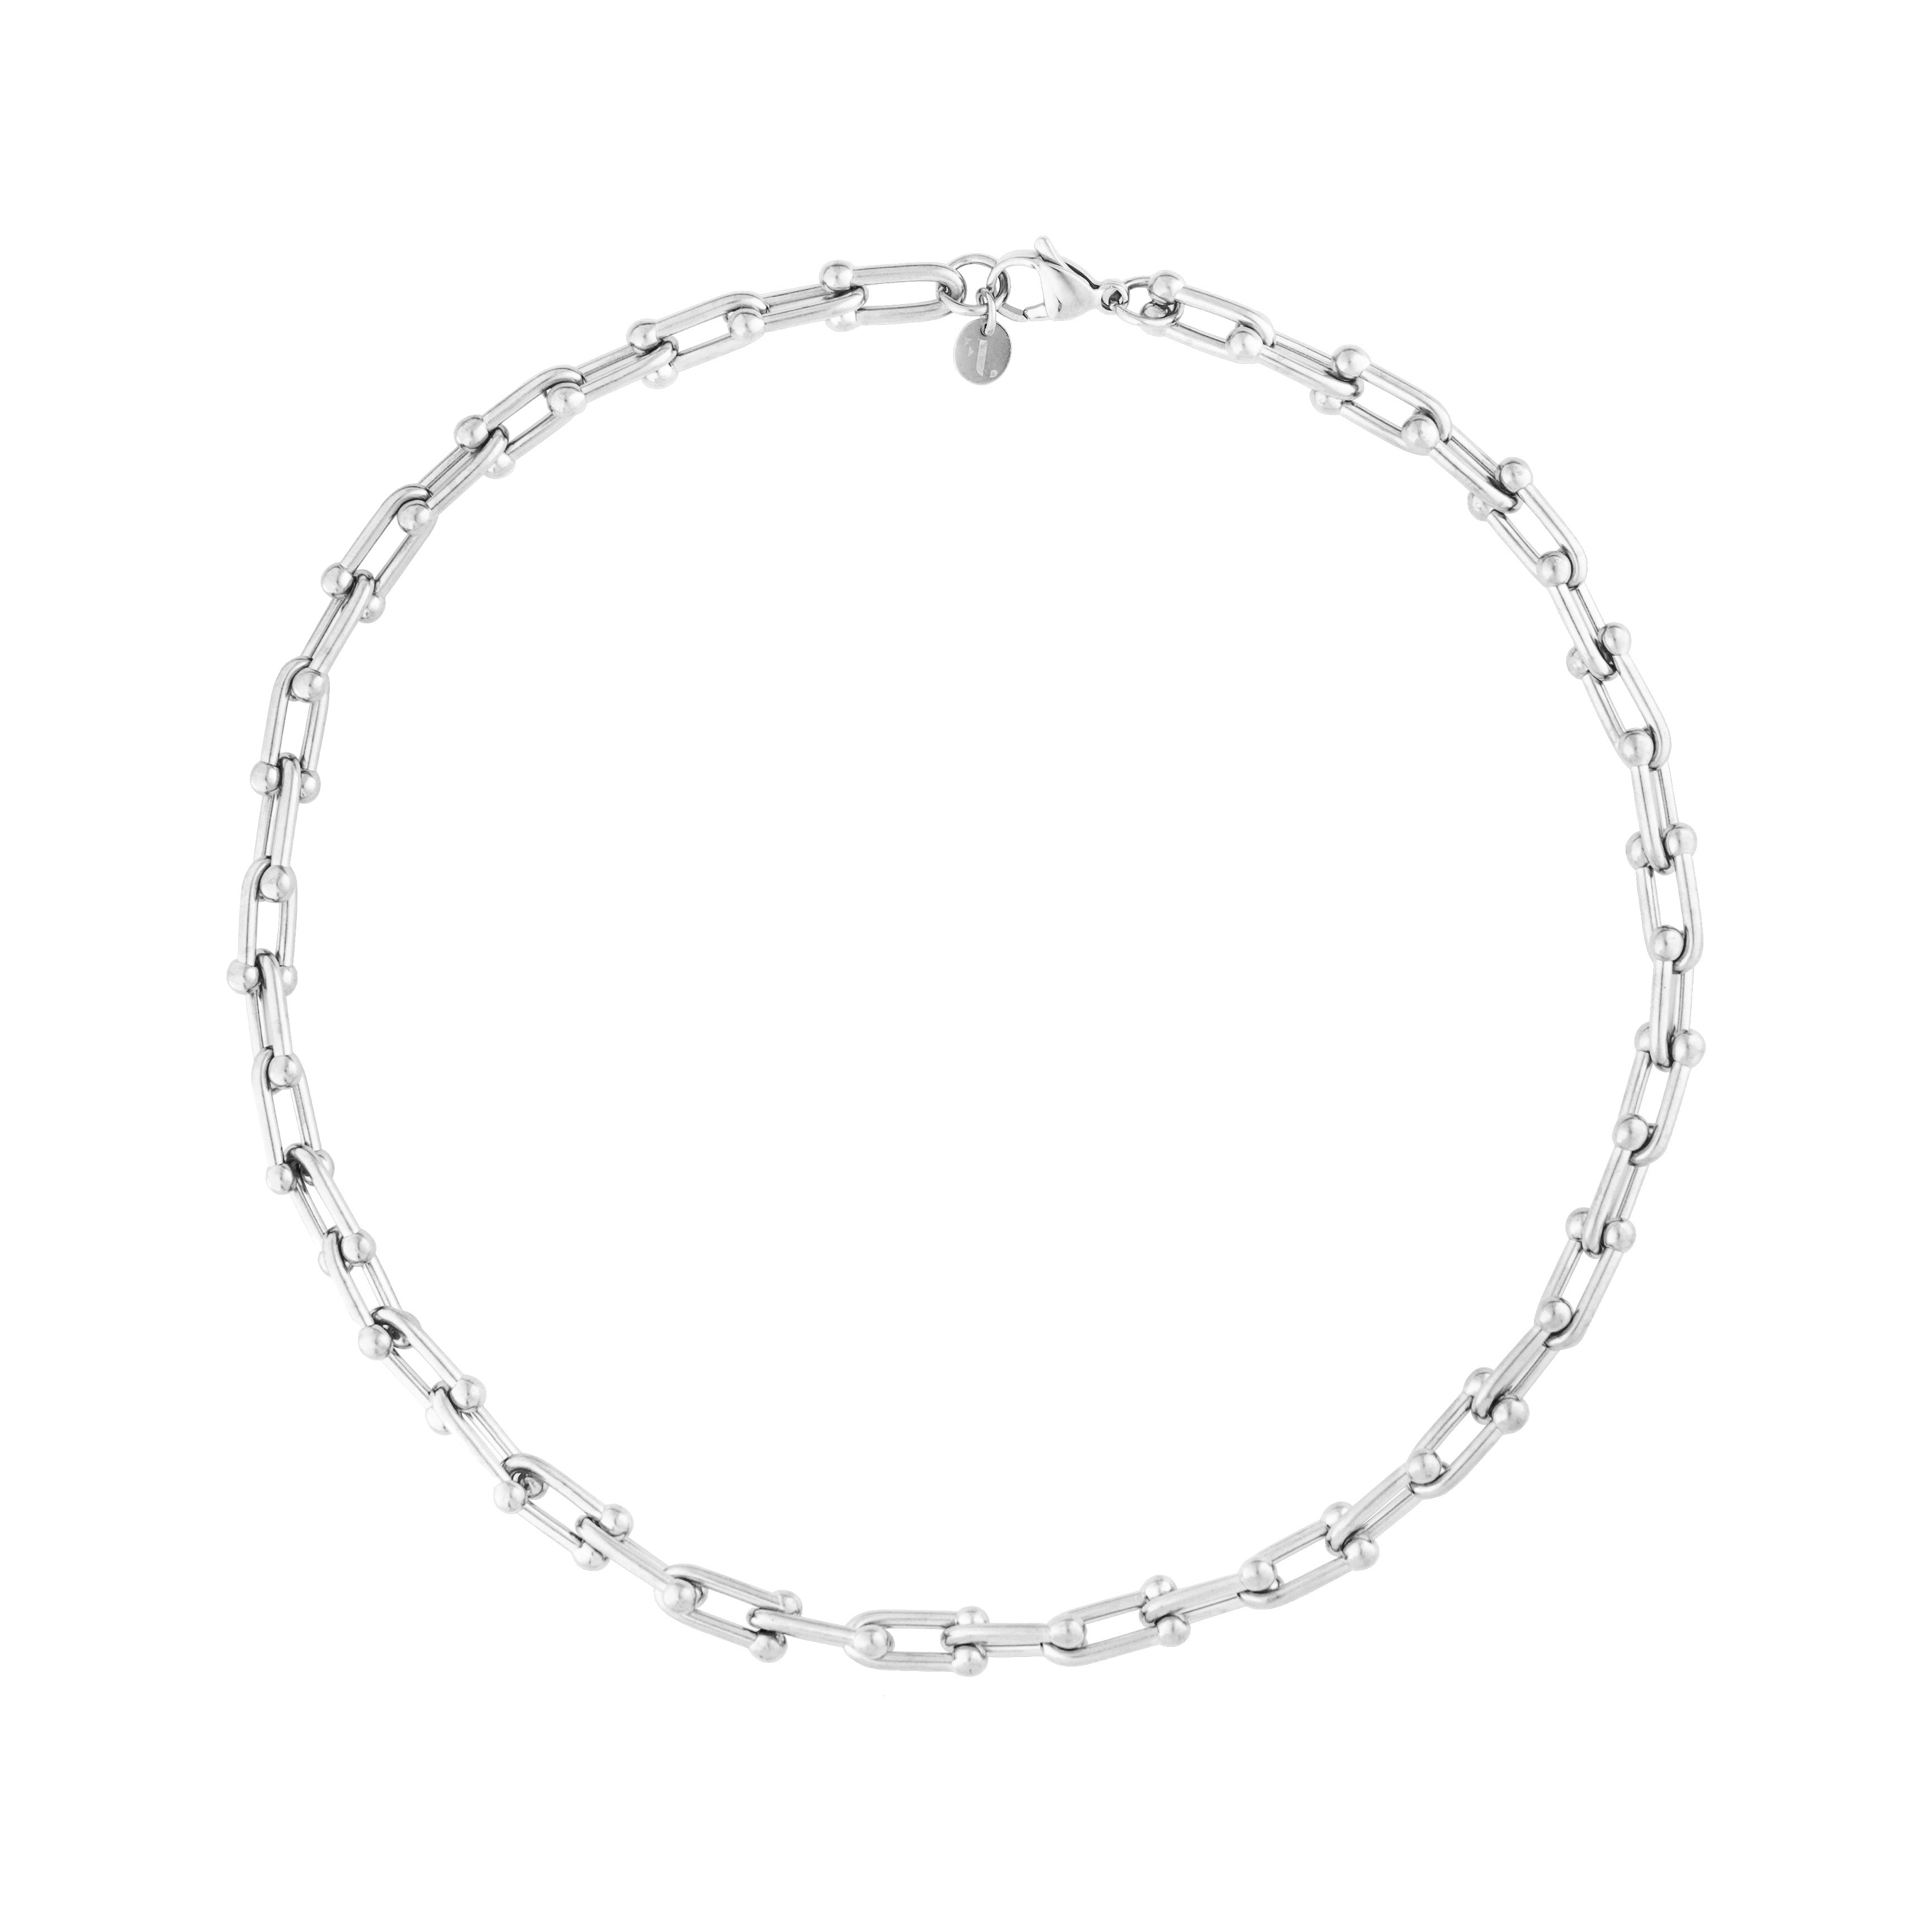 FJ Watches sepik necklace silver men women stainless steel adjustable Horseshoe Clavicle Chain 5mm 50cm 45cm